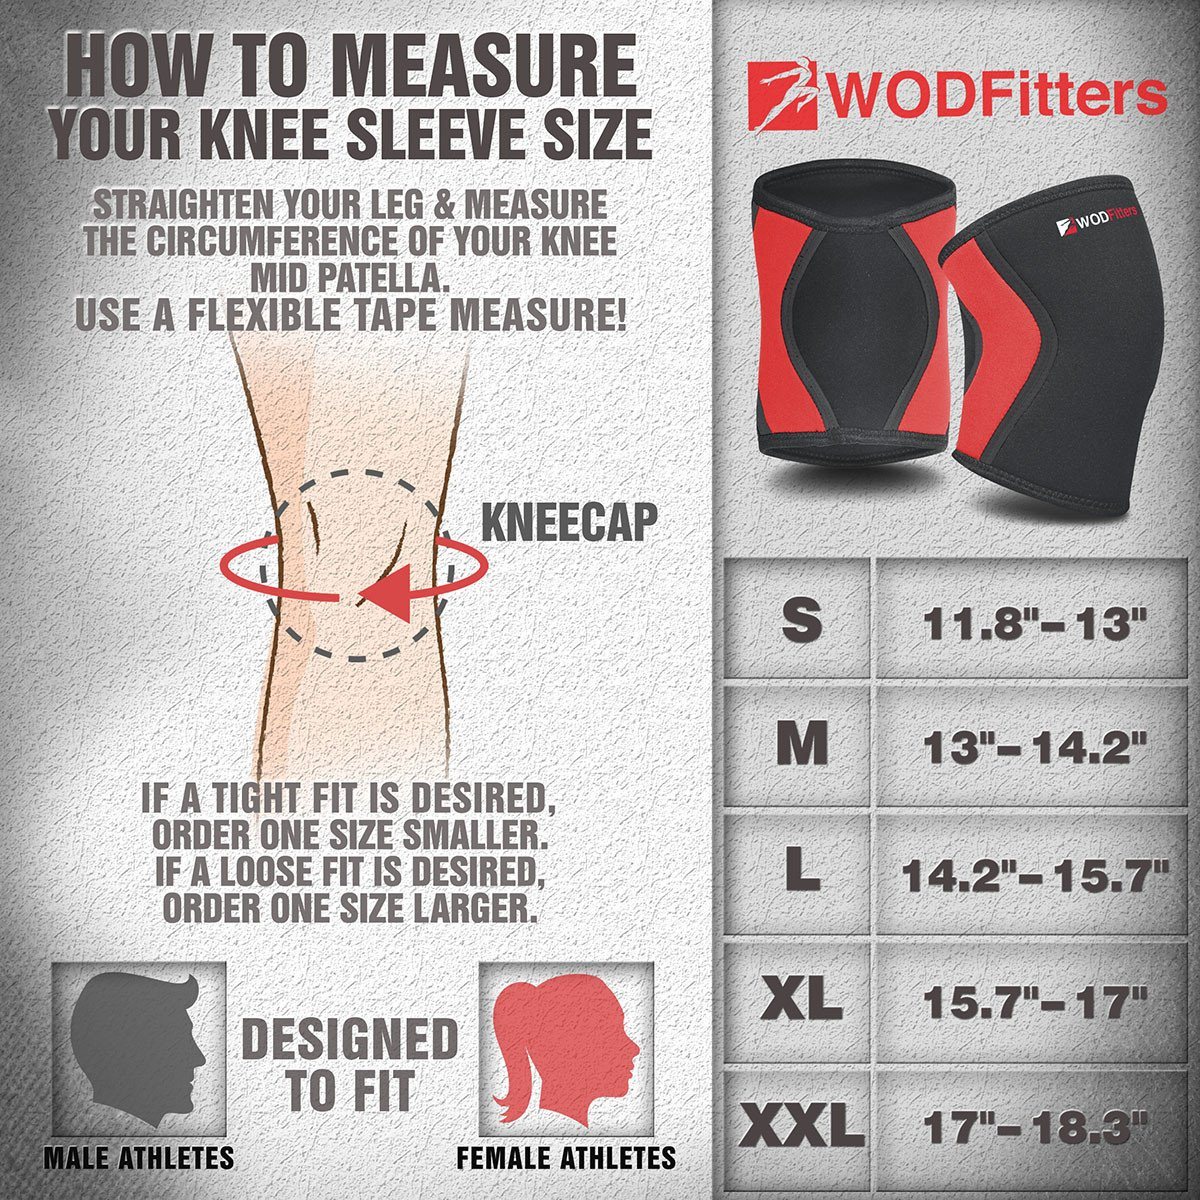 WODFitters Knee Sleeves - 5 mm - Sold as a Pair 